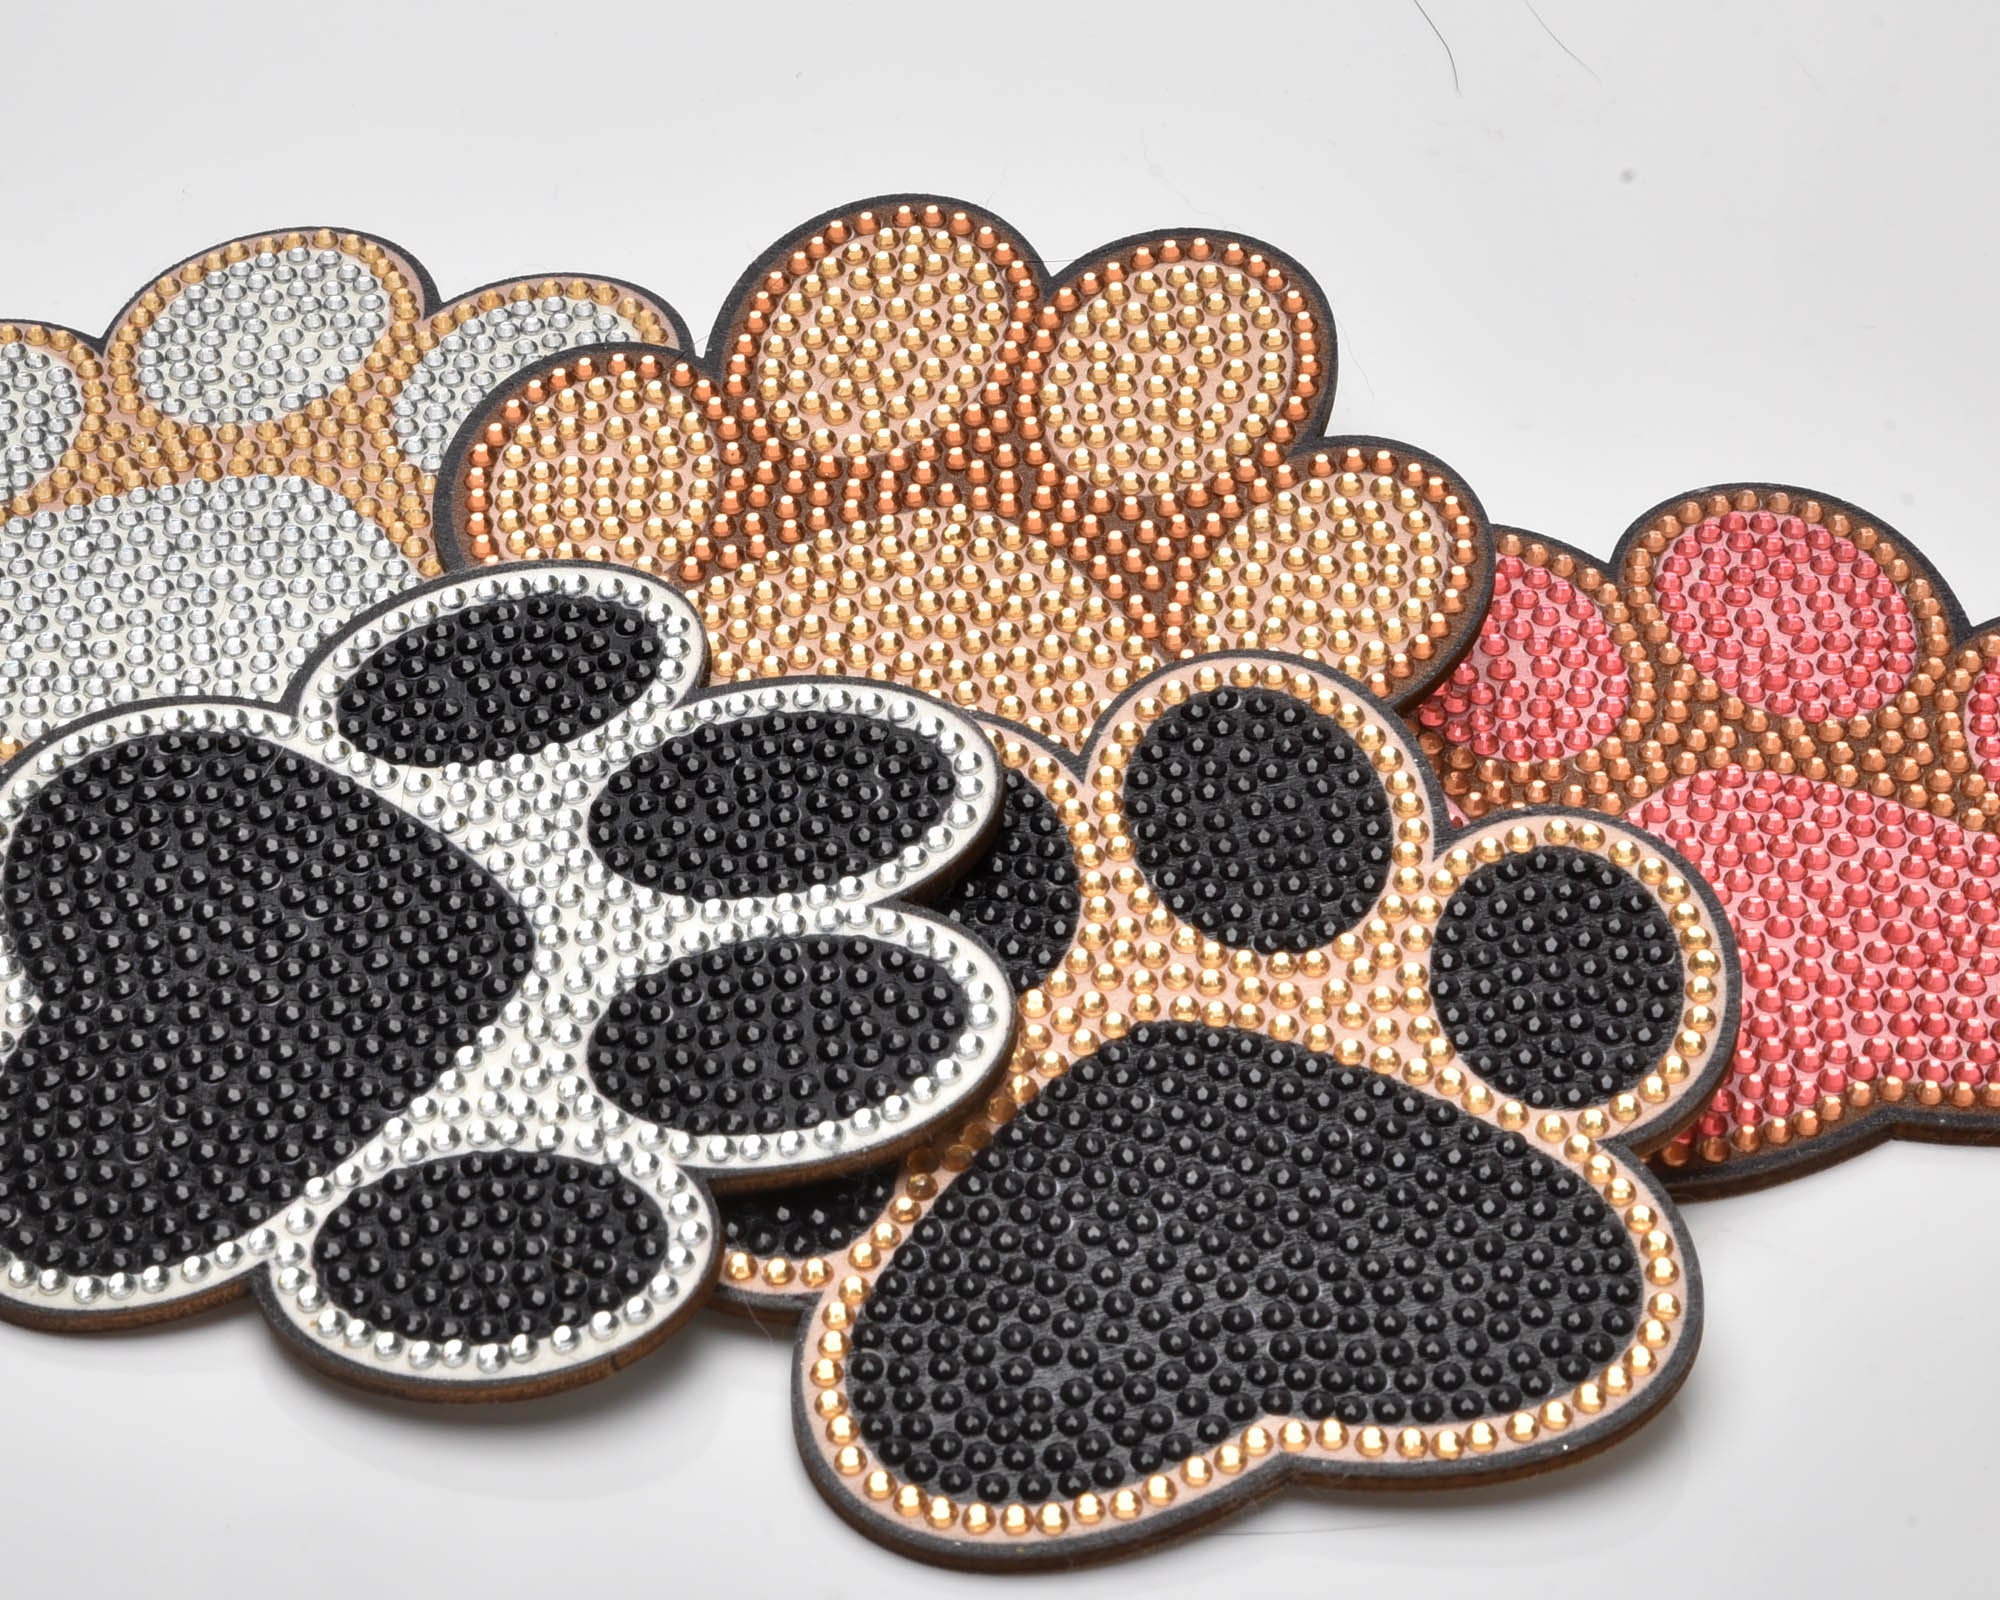 6 Pcs Mandala Pattern Diamond Painting DIY Coasters With Holder 